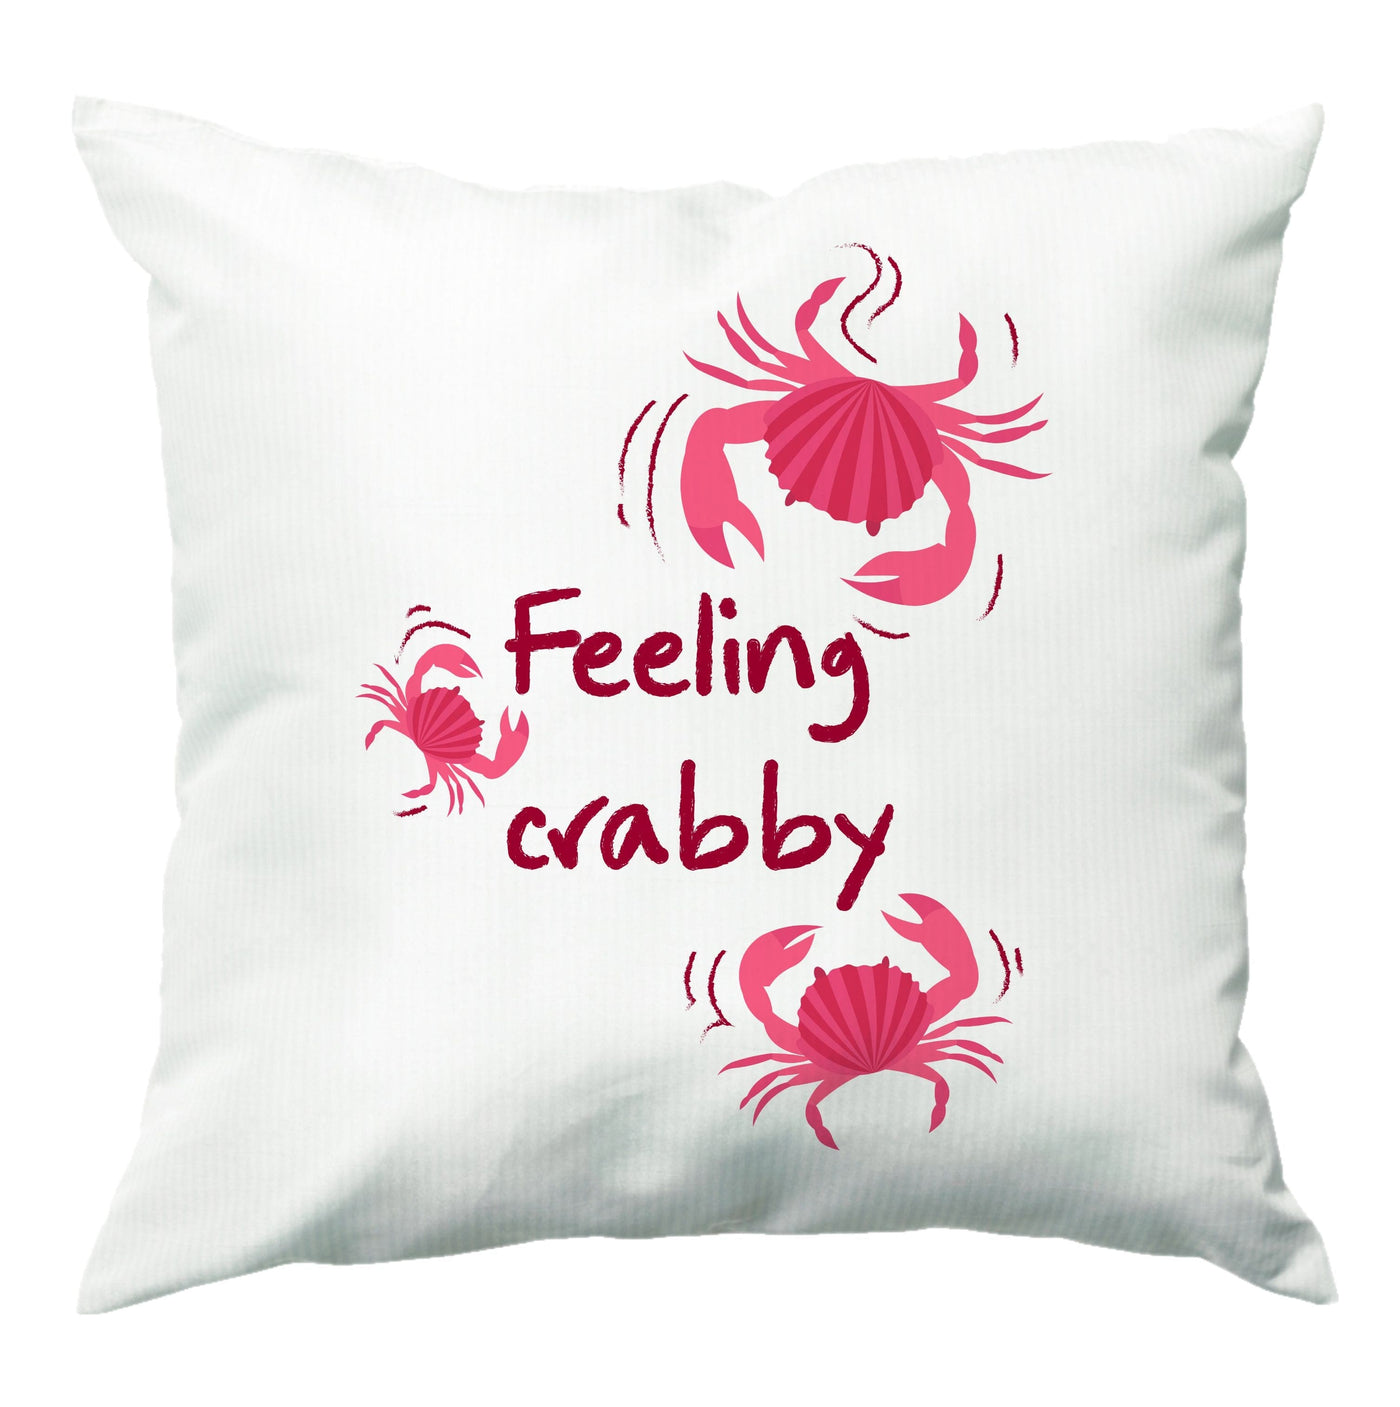 Feeling Crabby - Sealife Cushion